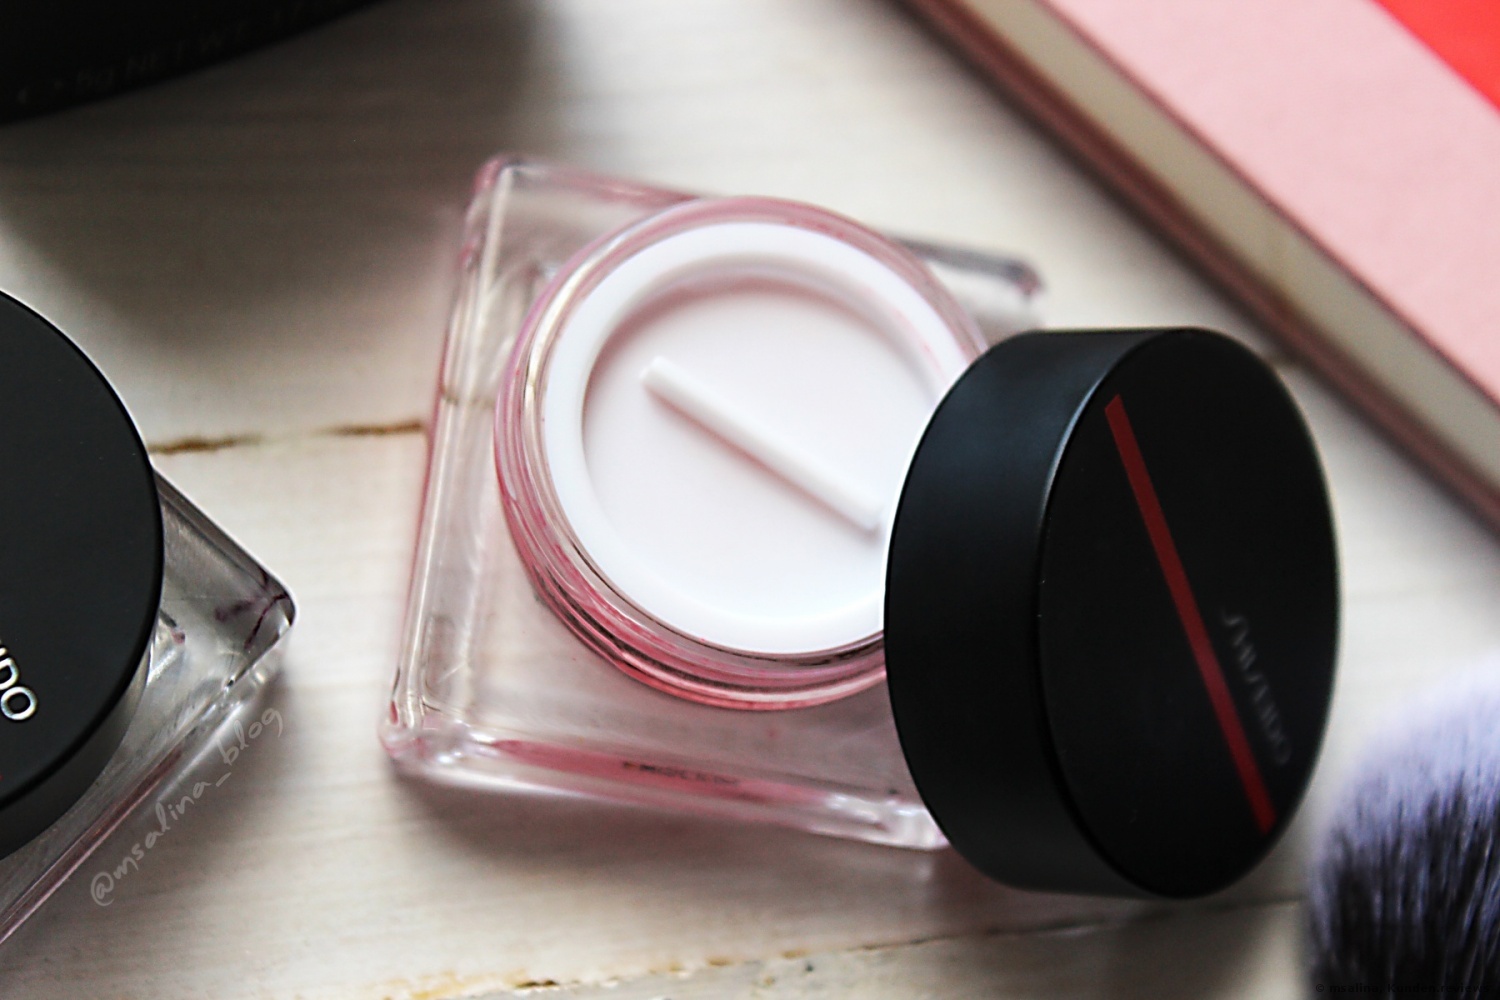 Shiseido Minimalist Blush